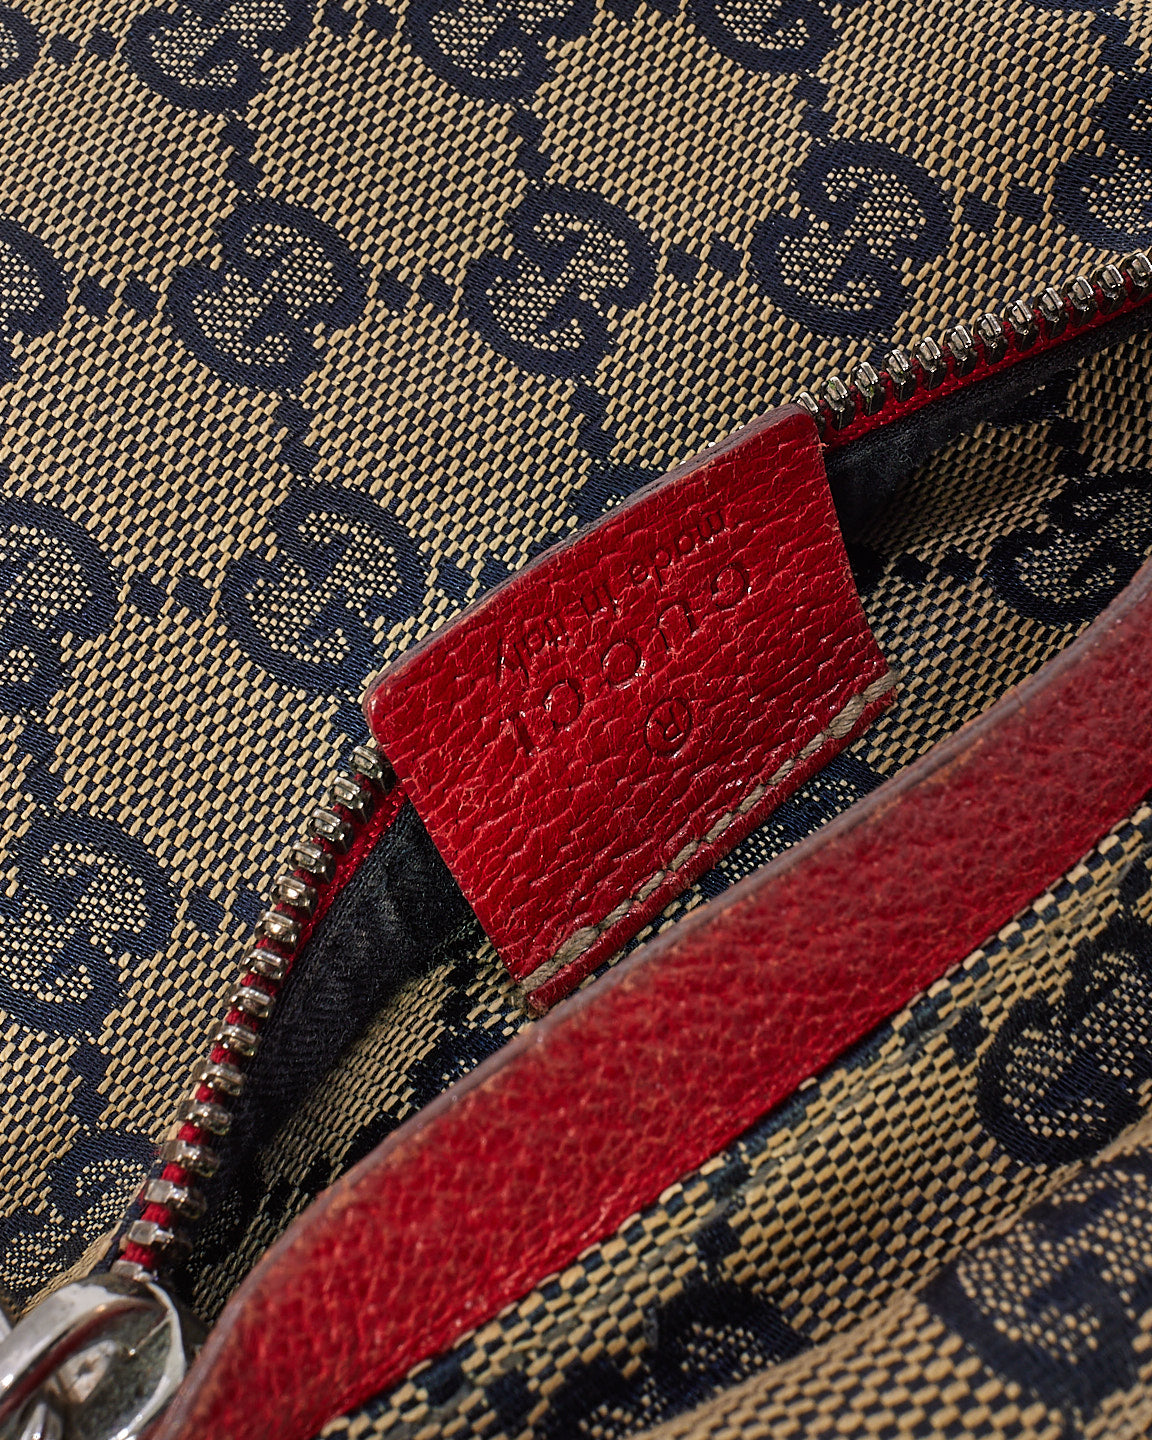 Gucci Red & Navy GG Monogram Web Double Pocket Belt Bag